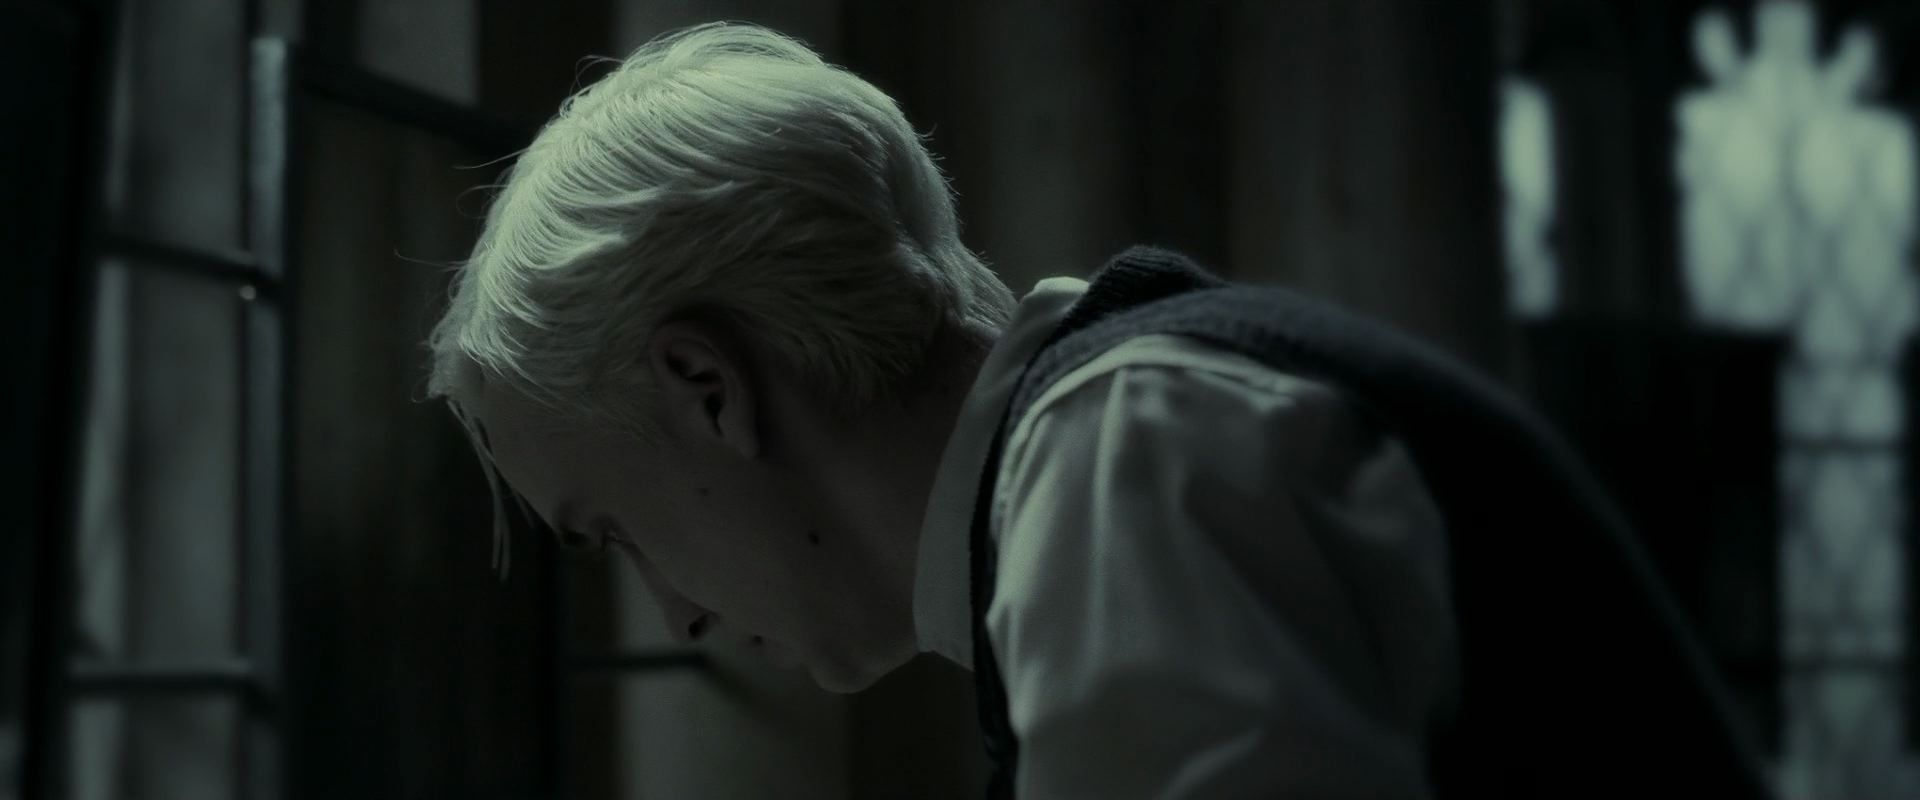 Draco Malfoy Image In Hbp HD Screencaps Wallpaper And